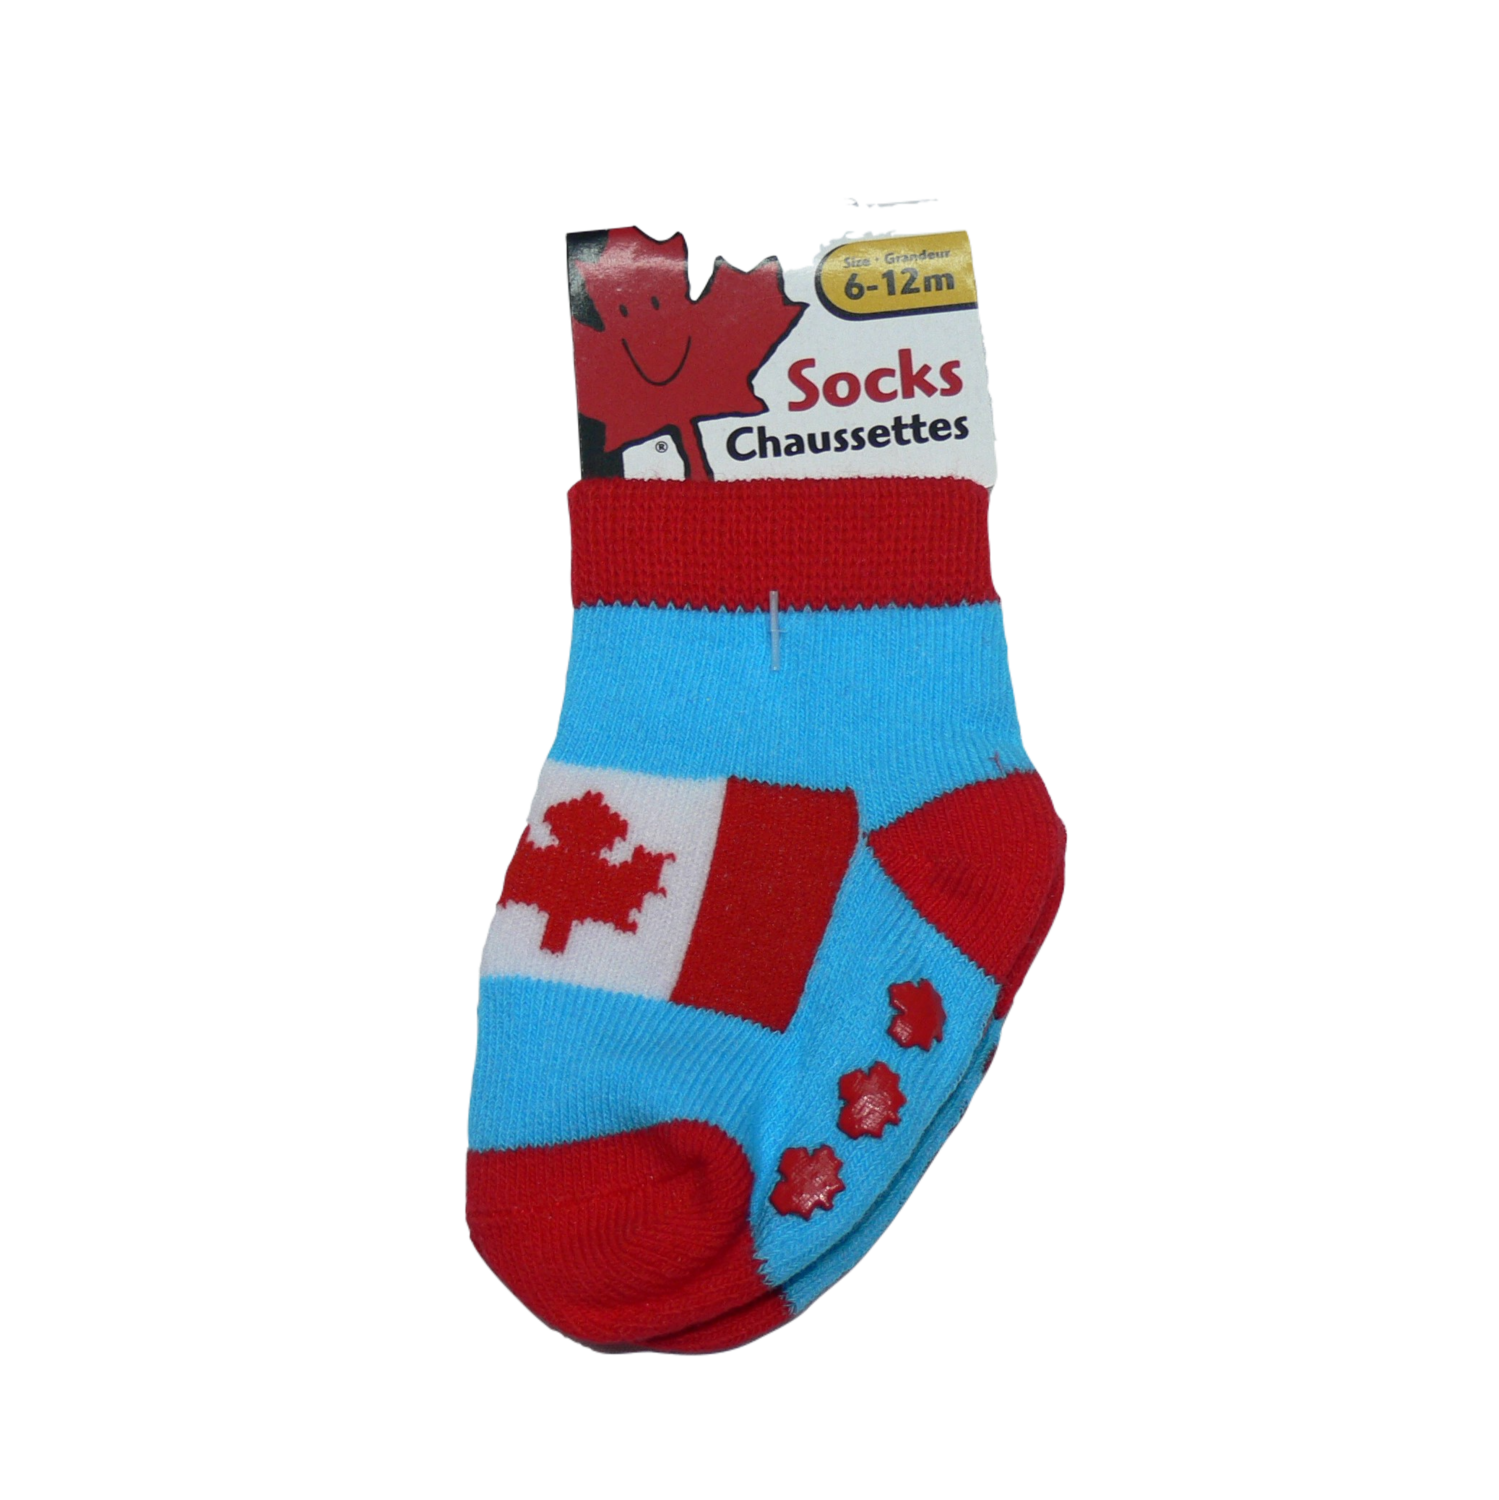 Canadian flag socks